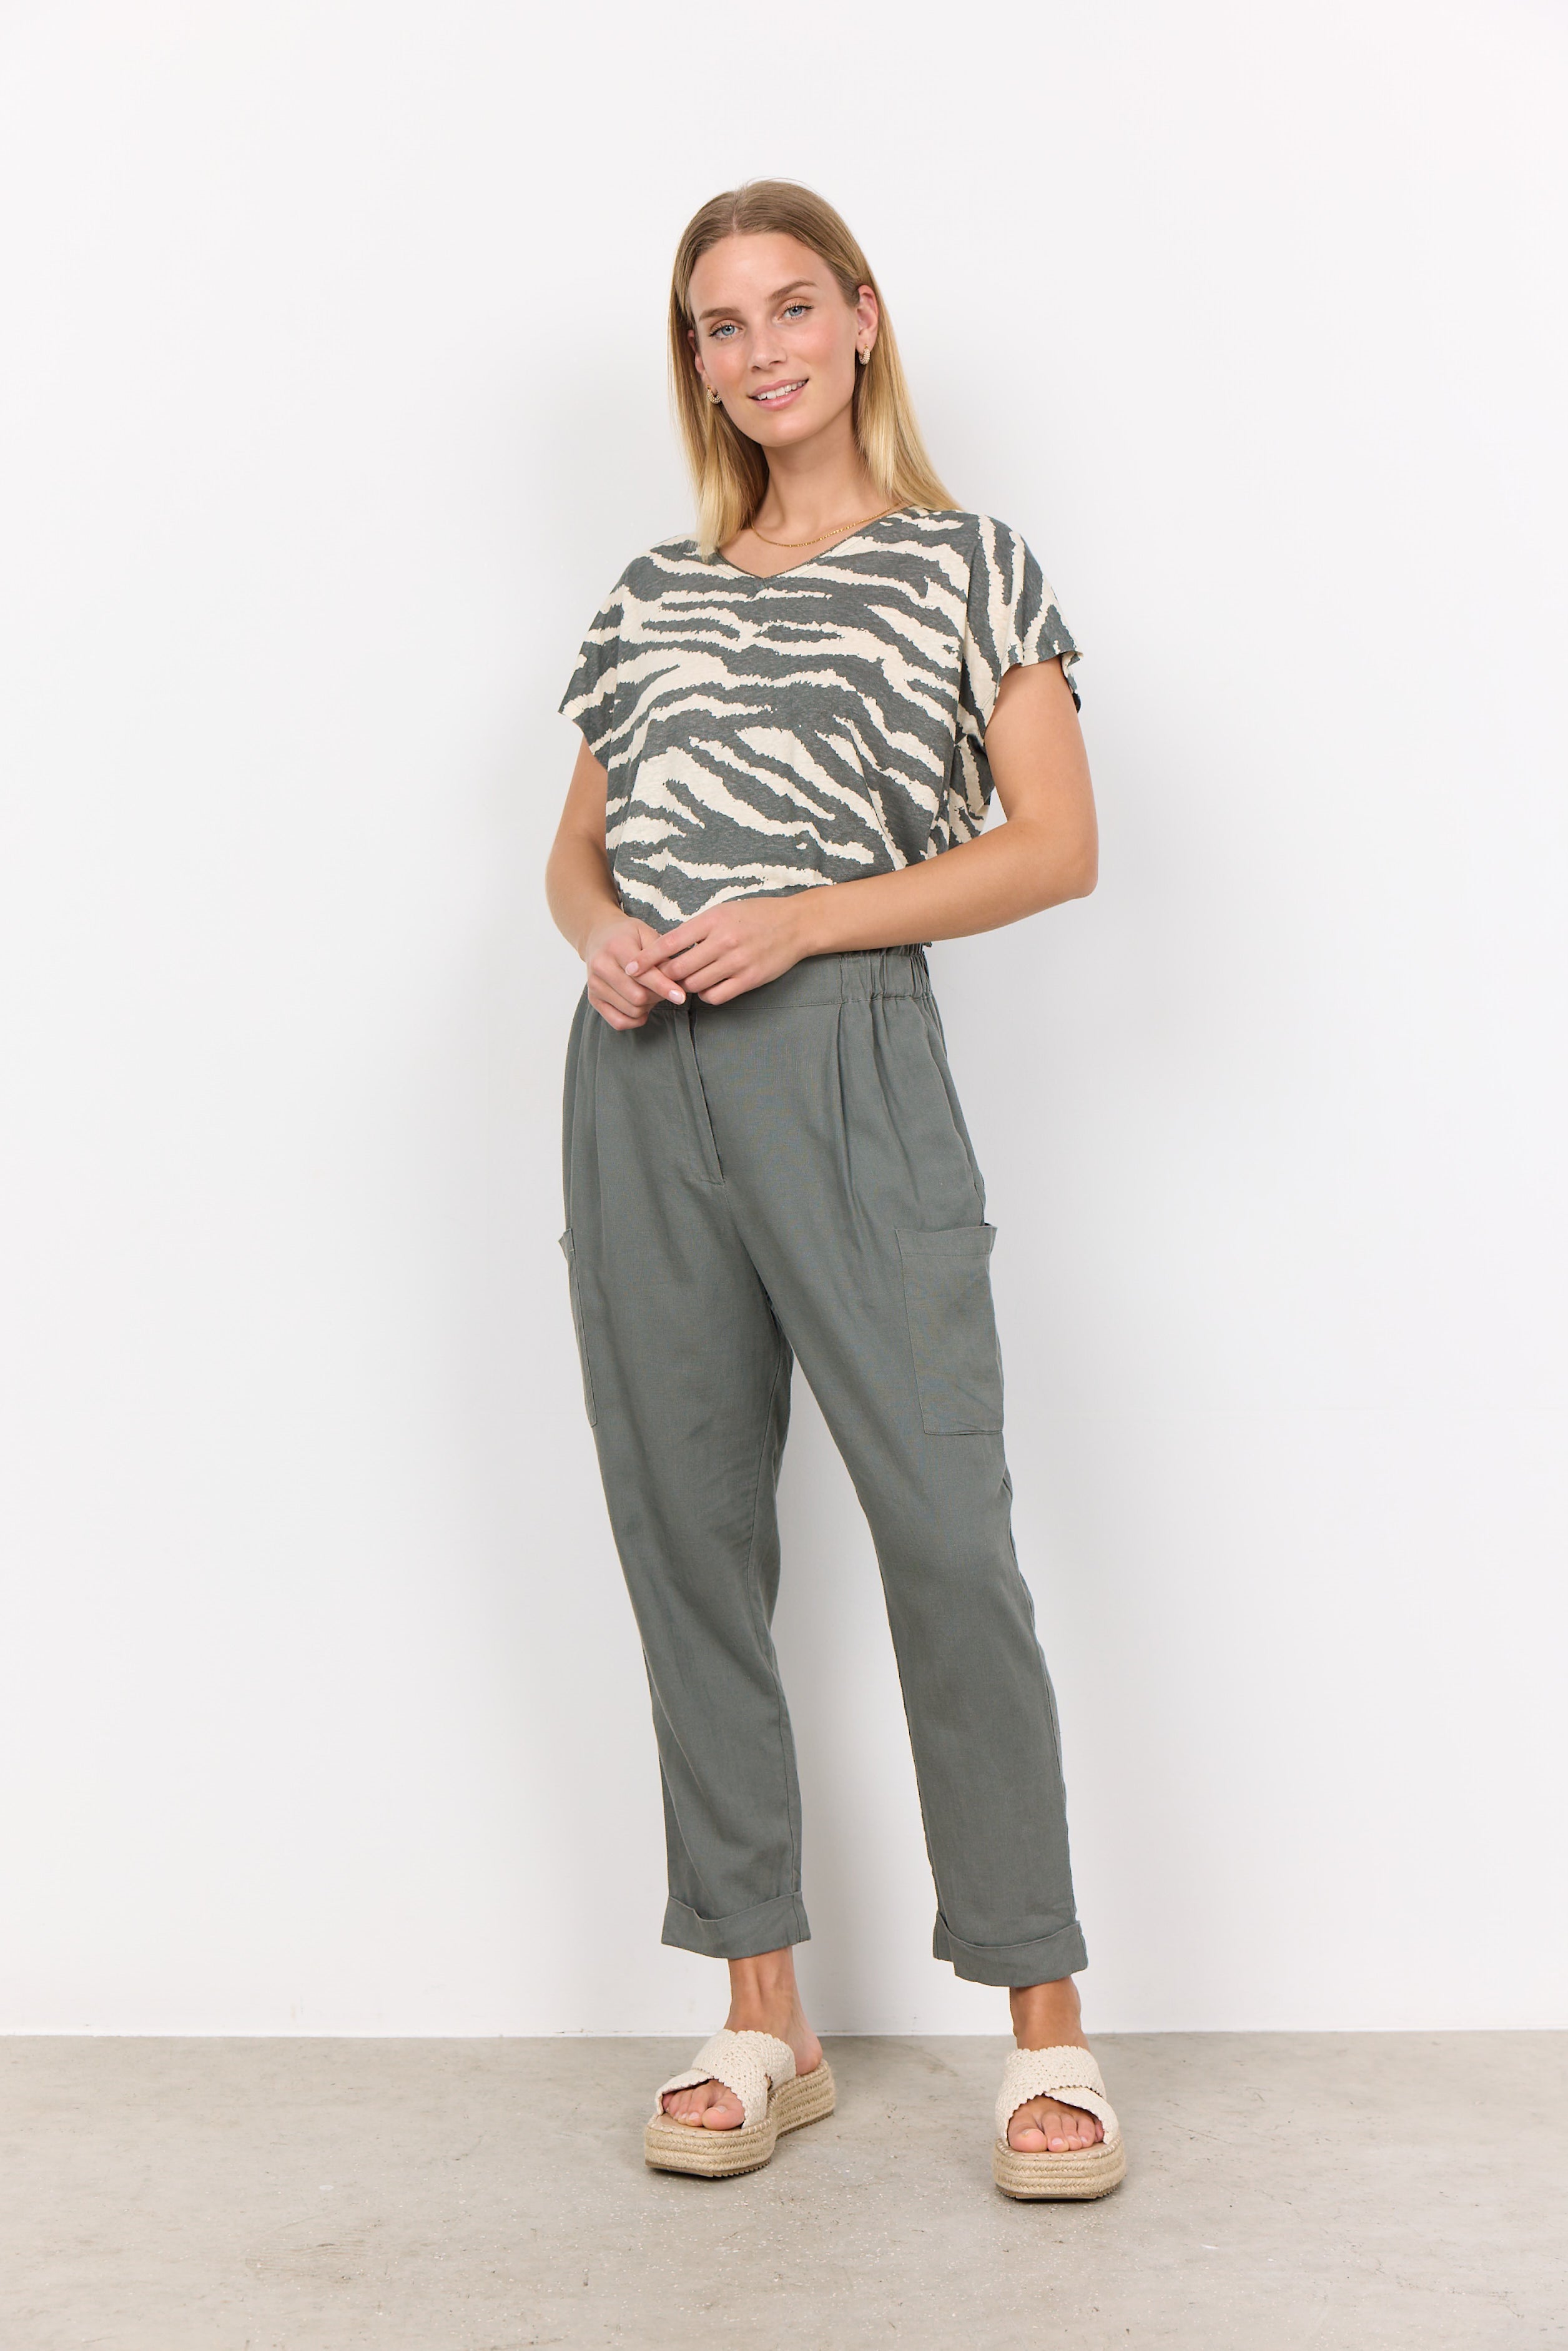 Soya Concept (26521) Women's Grey & White  Zebra Print V-Neck Tee